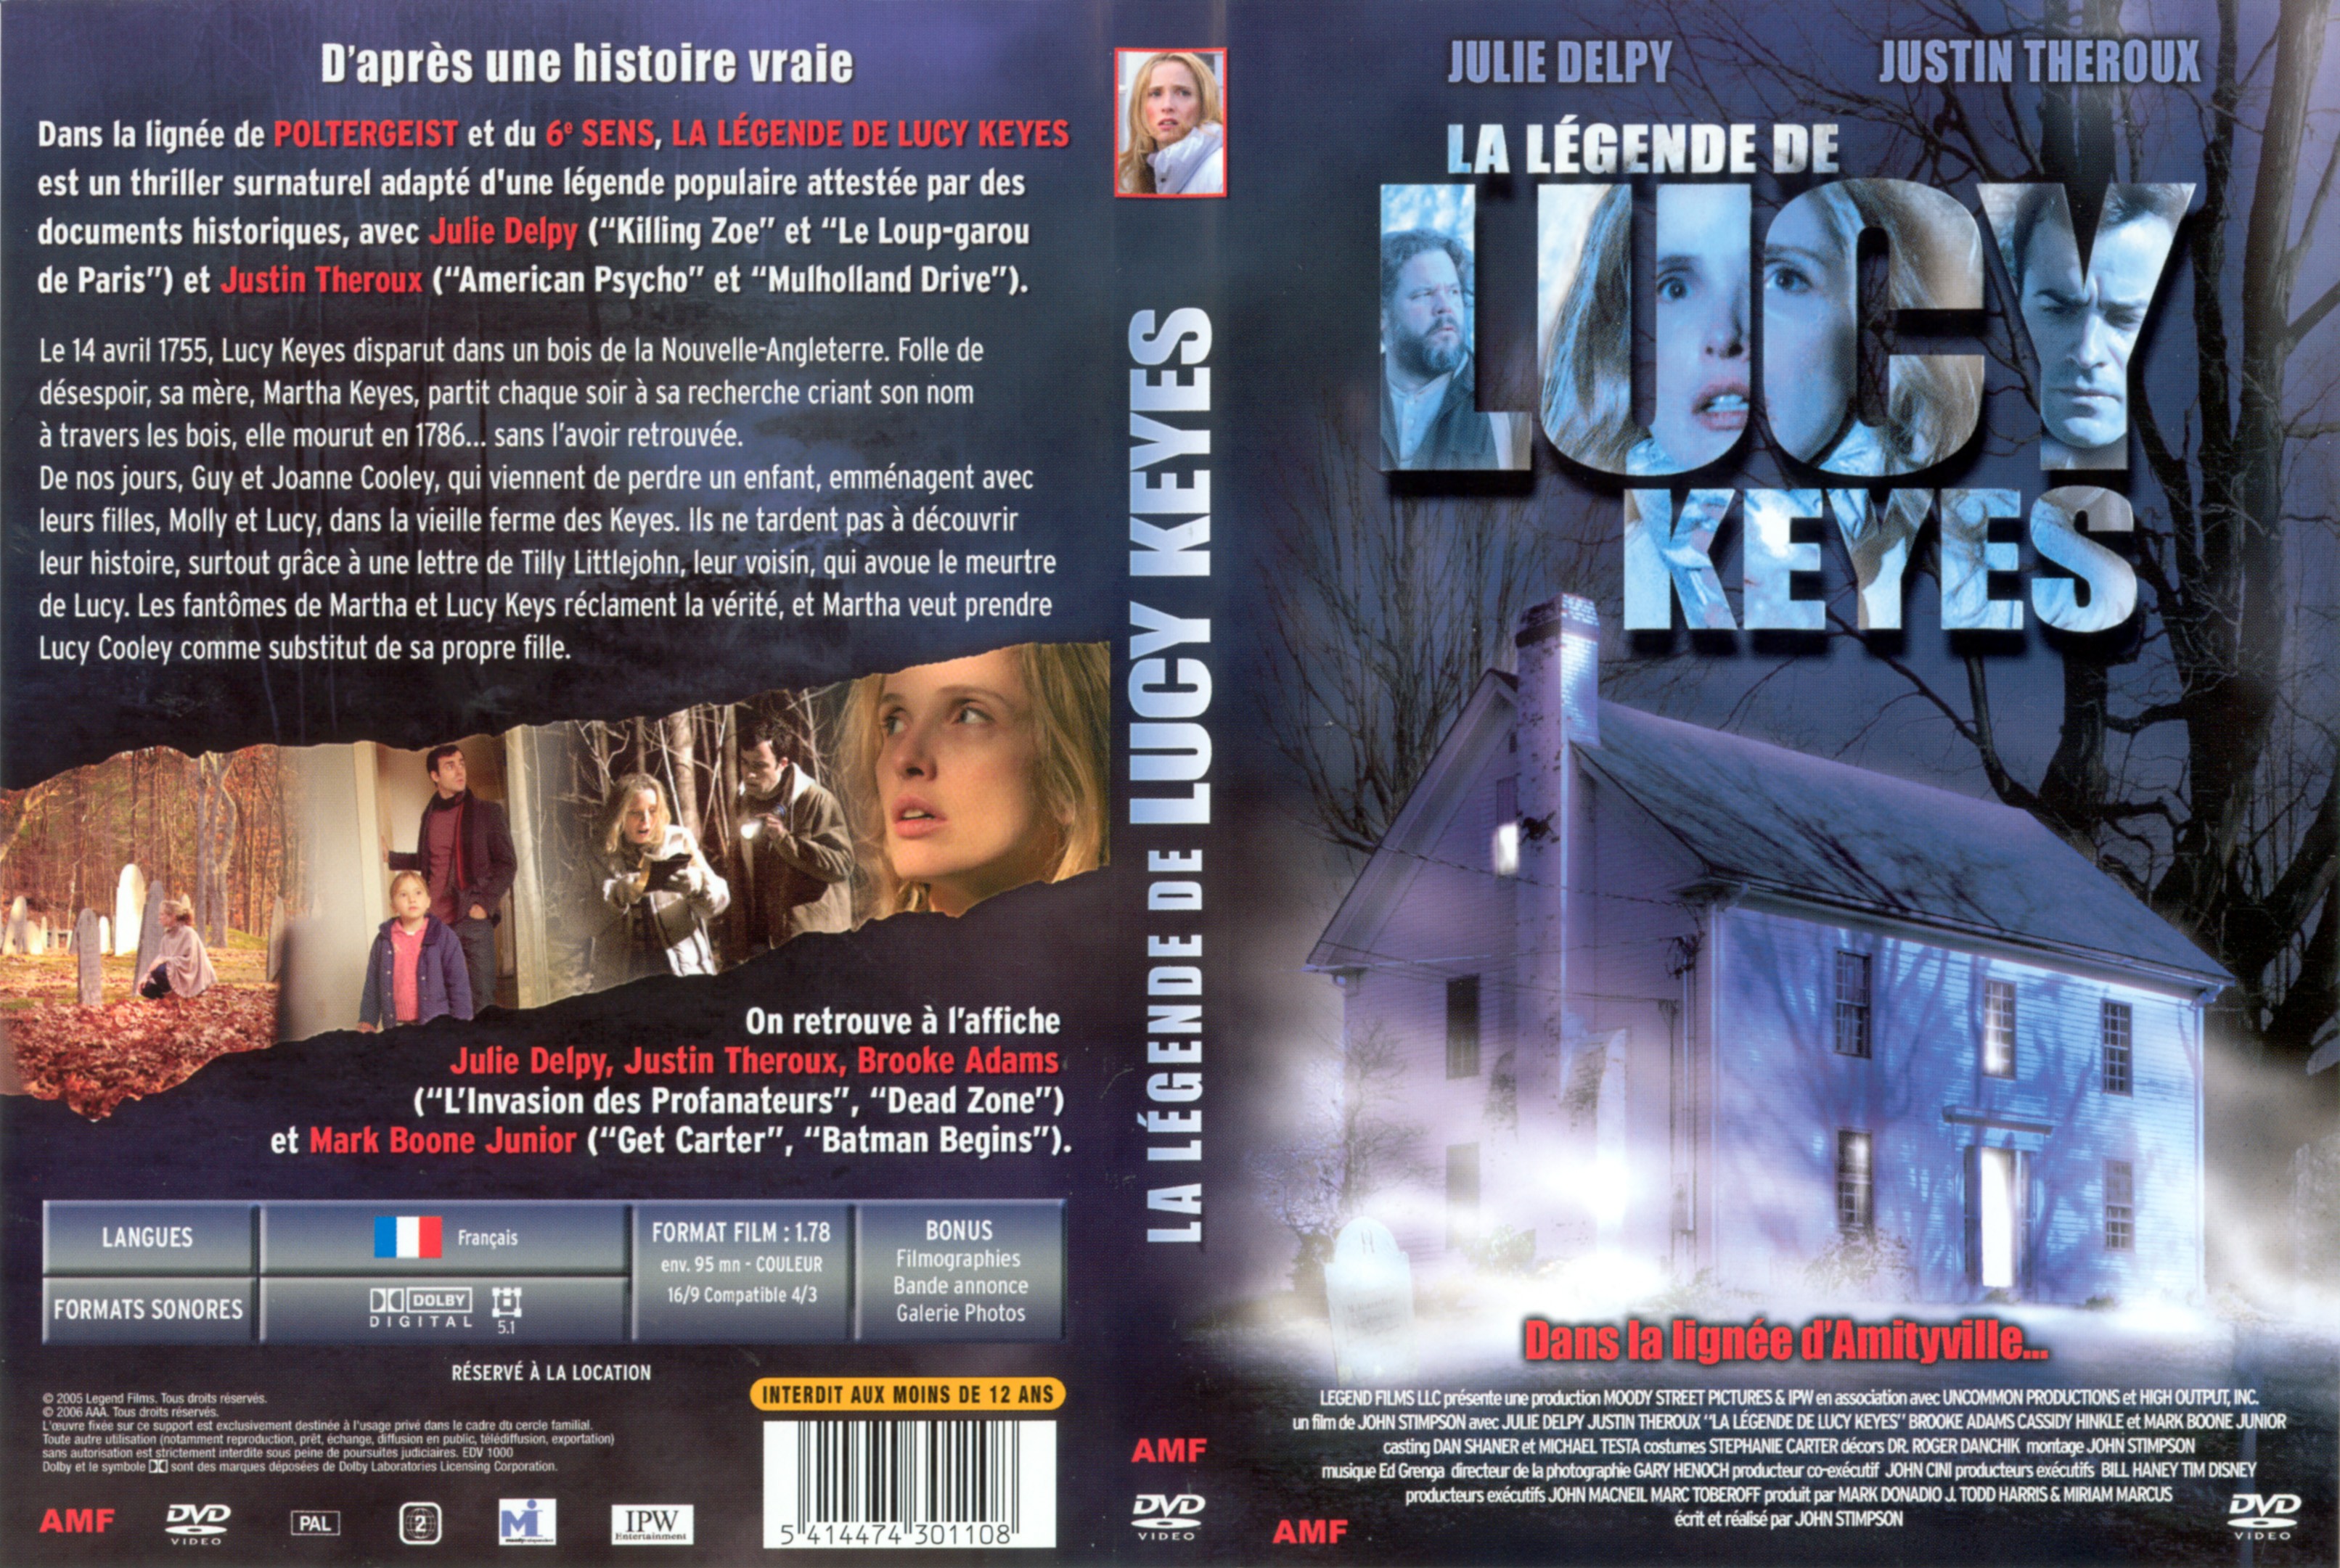 Jaquette DVD La lgende de Lucy Keyes